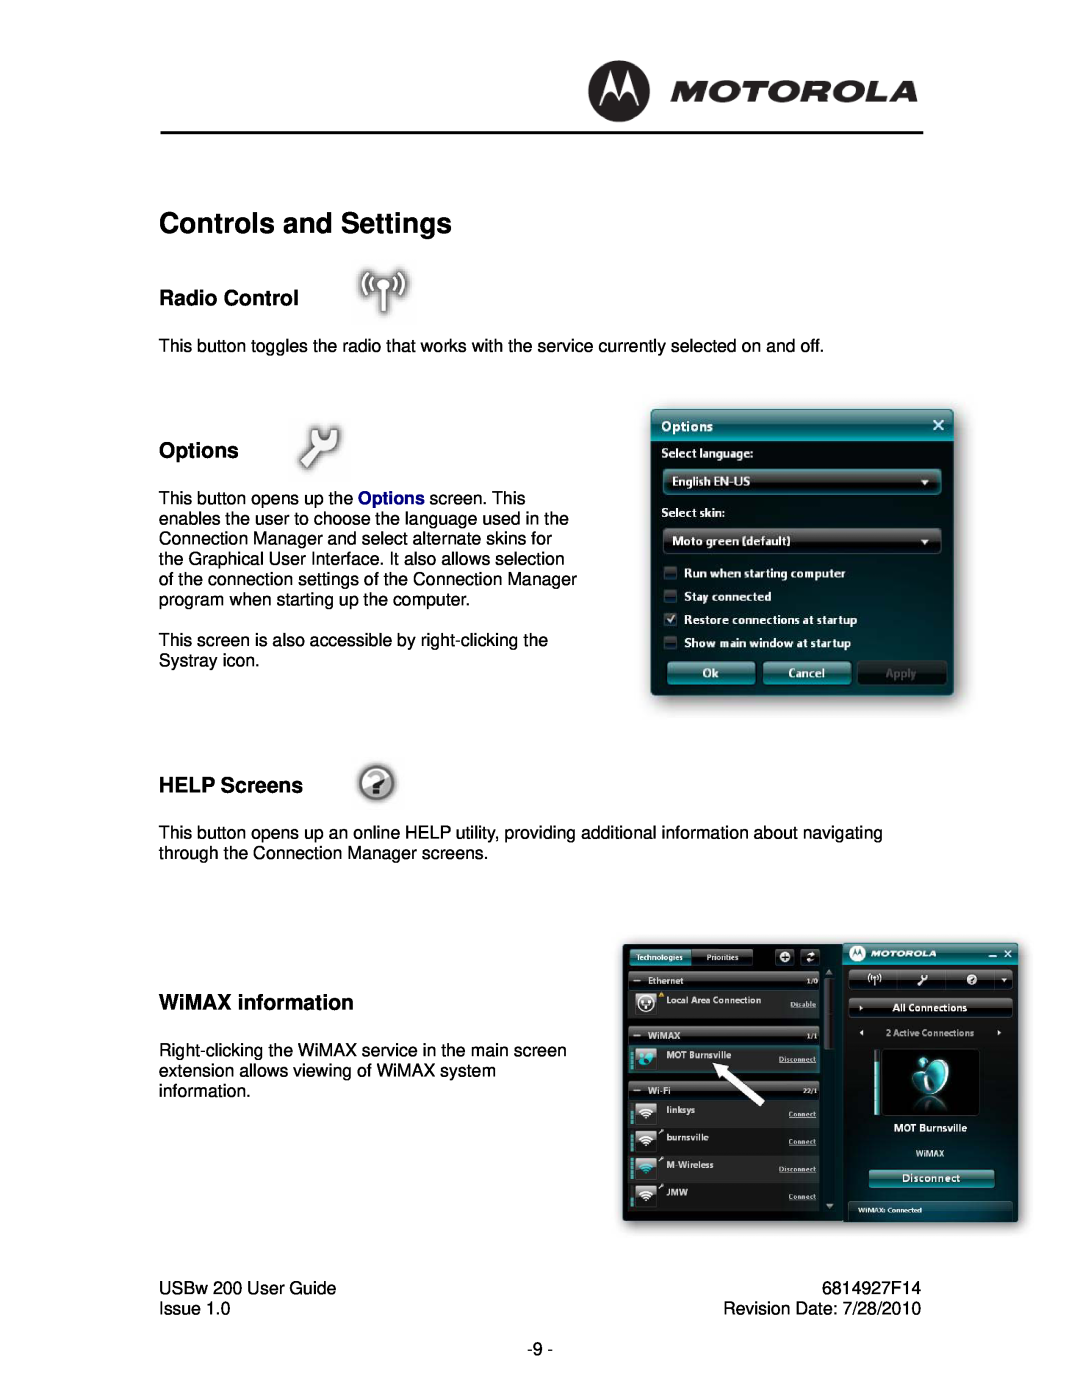 Motorola USBW 200 manual Controls and Settings, Radio Control, Options, HELP Screens, WiMAX information 